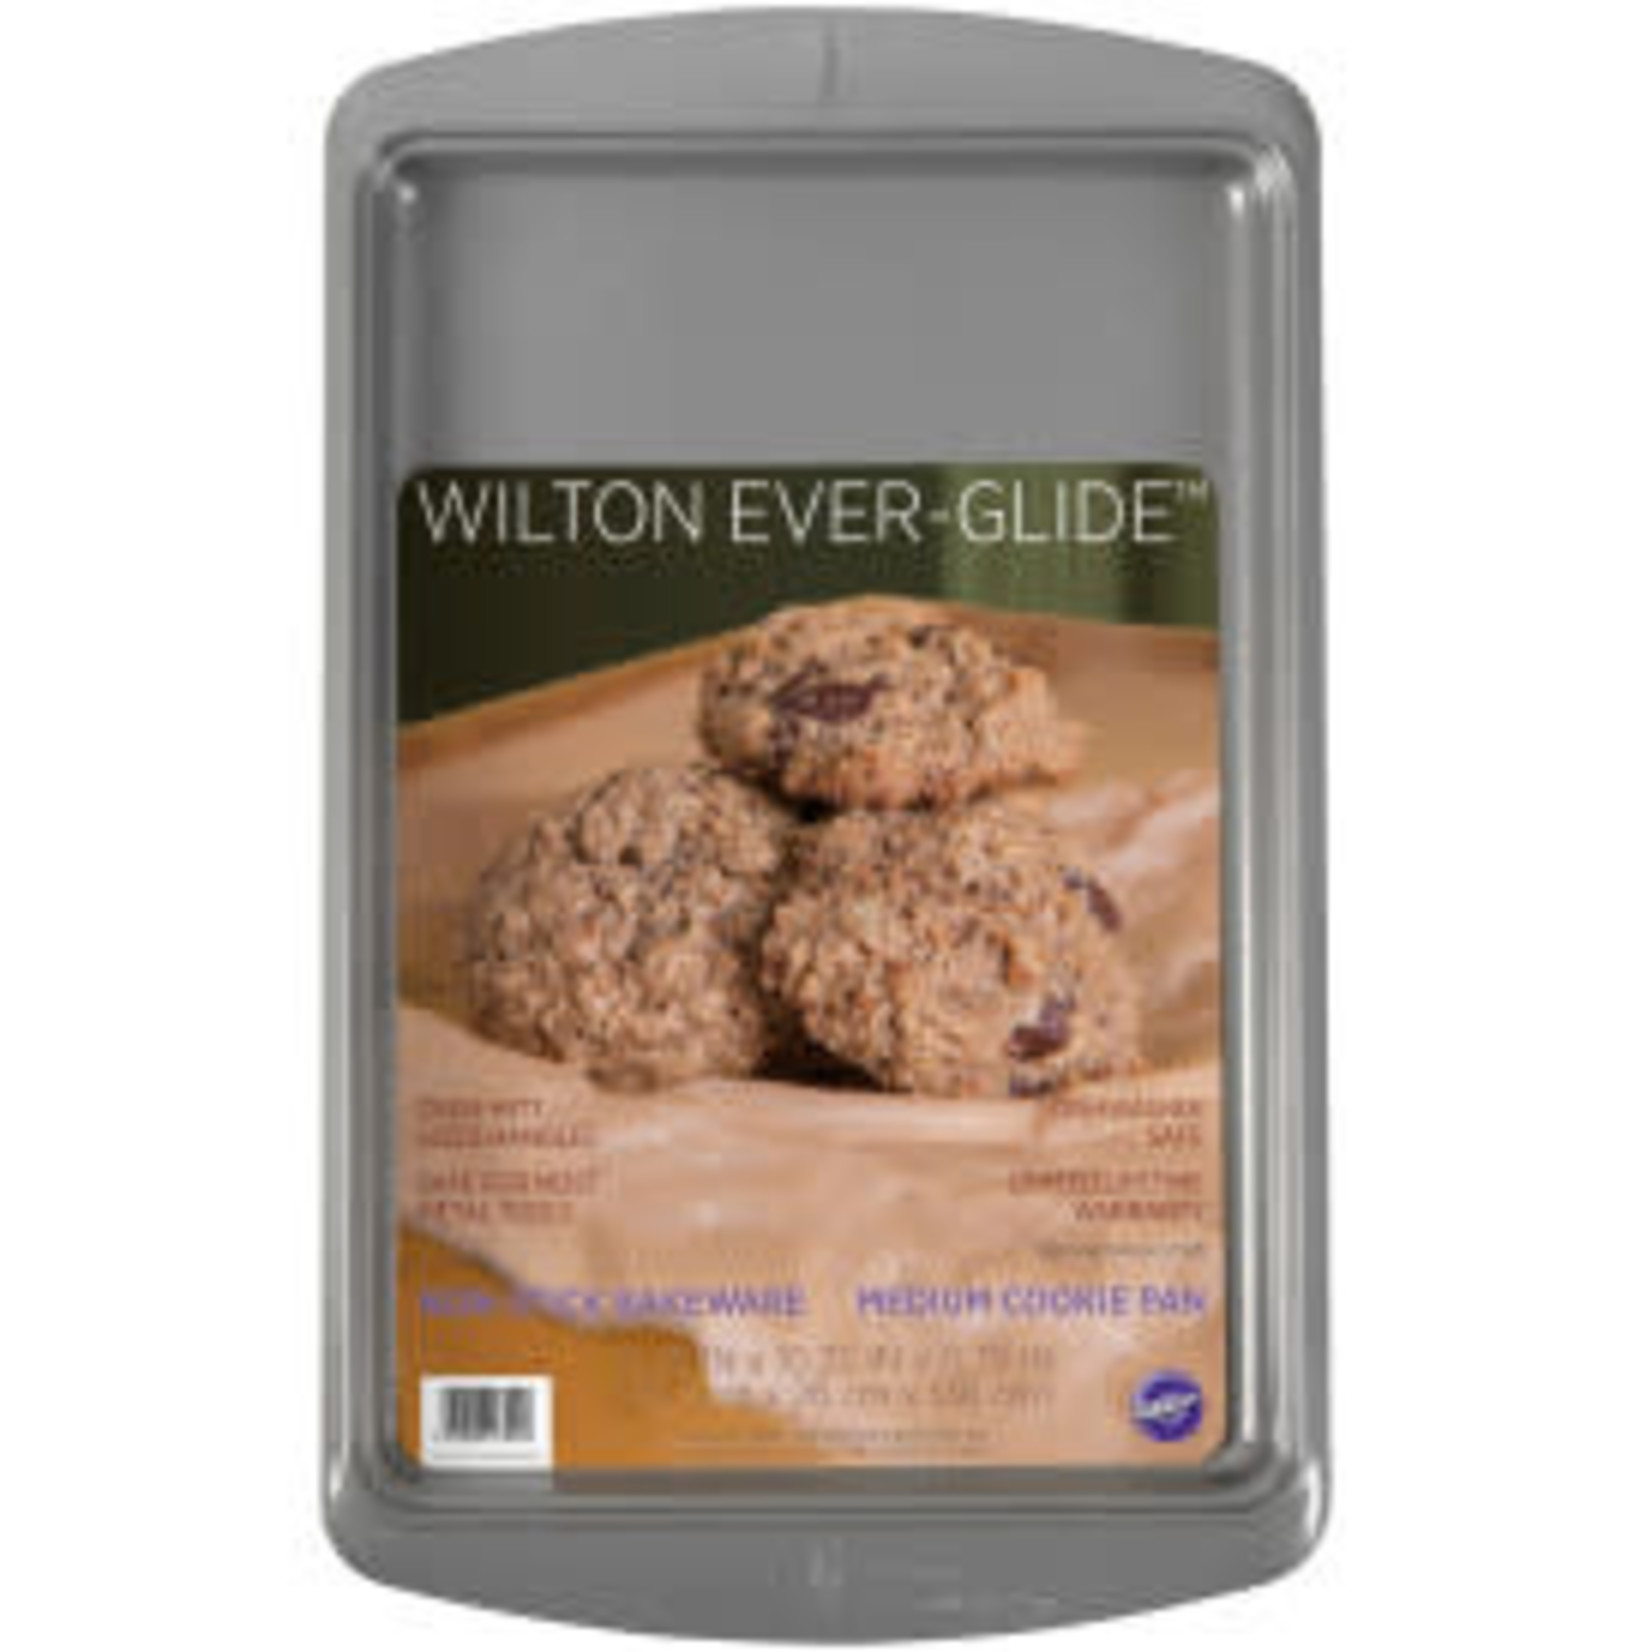 TWS Wilton Ever-Glide Non-Stick Cookie Sheet, 15.25 x 10.25-Inch